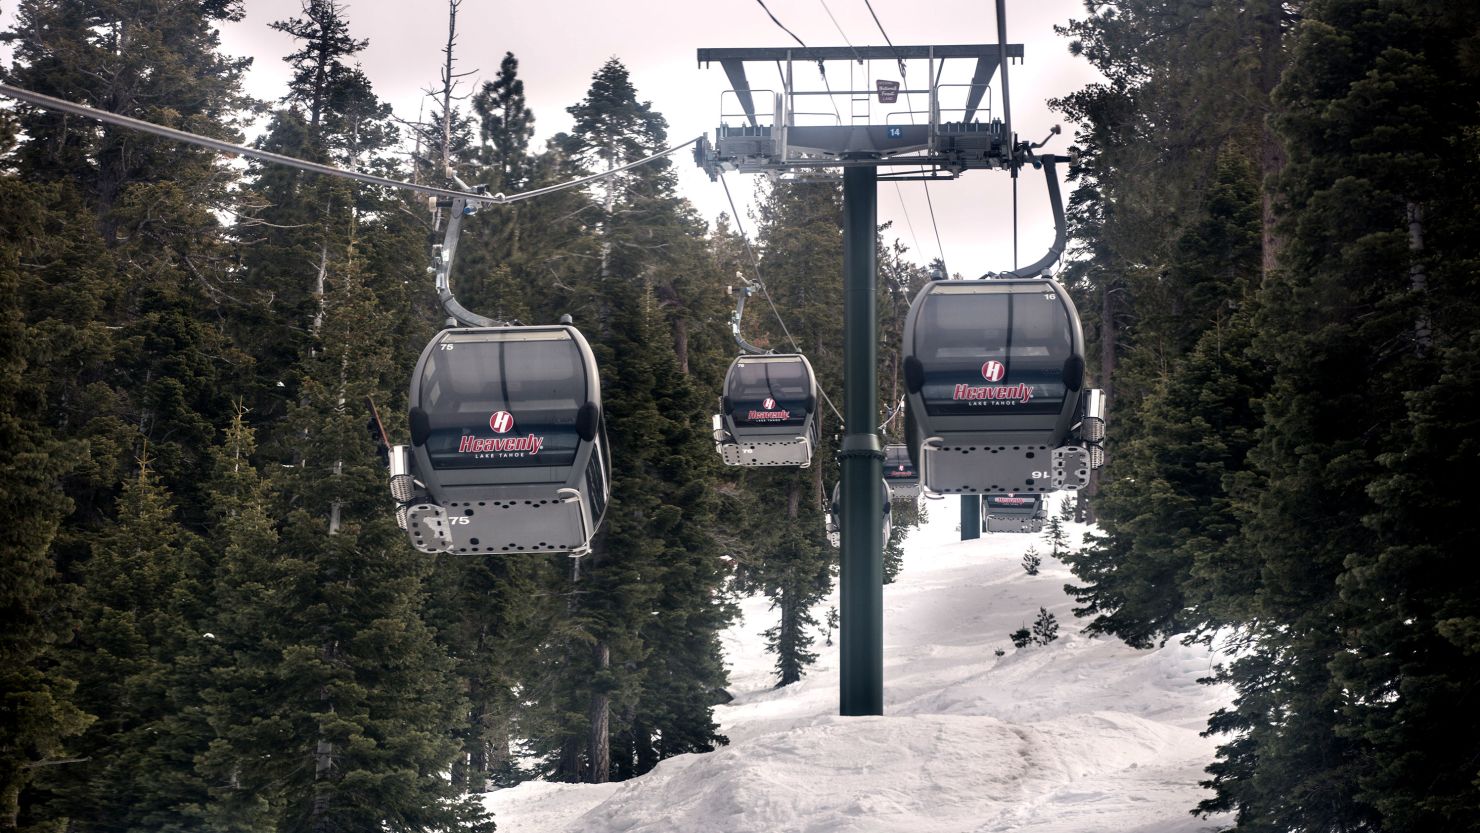 The Heavenly Ski Resort.